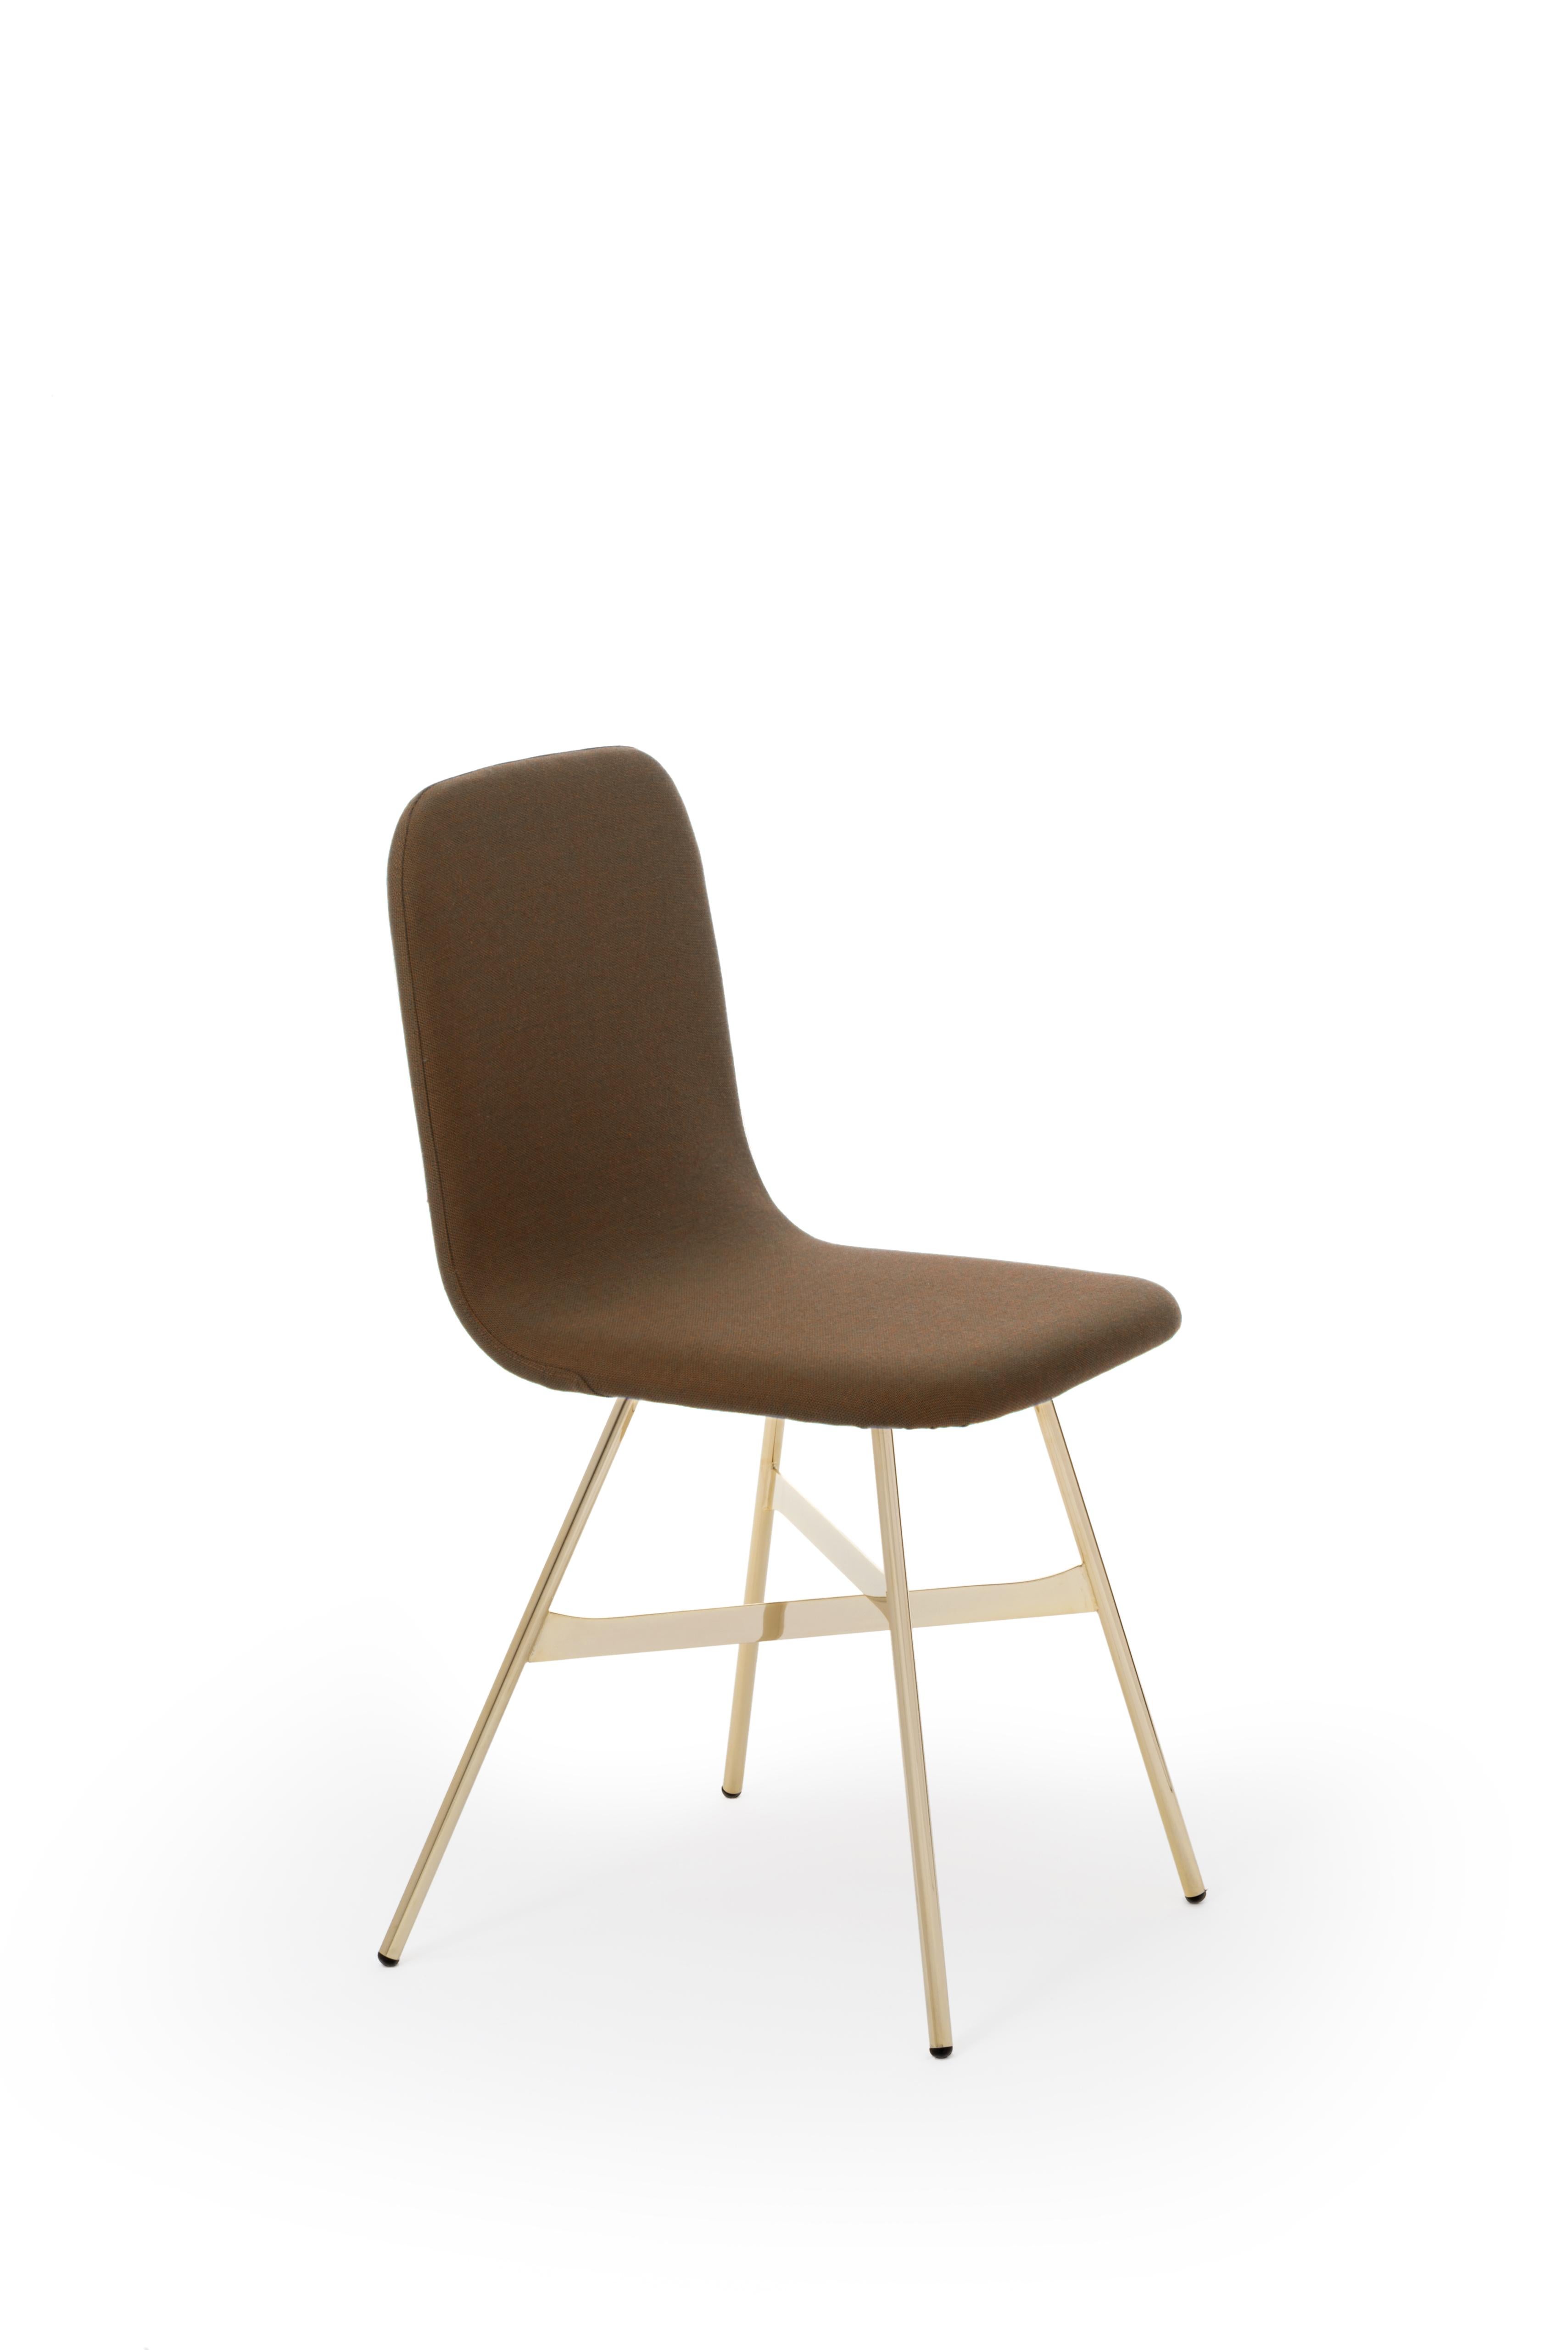 Italian Tria Simple Chair Golden Legs Upholstered in Mint Green Velvet Made in Italy For Sale